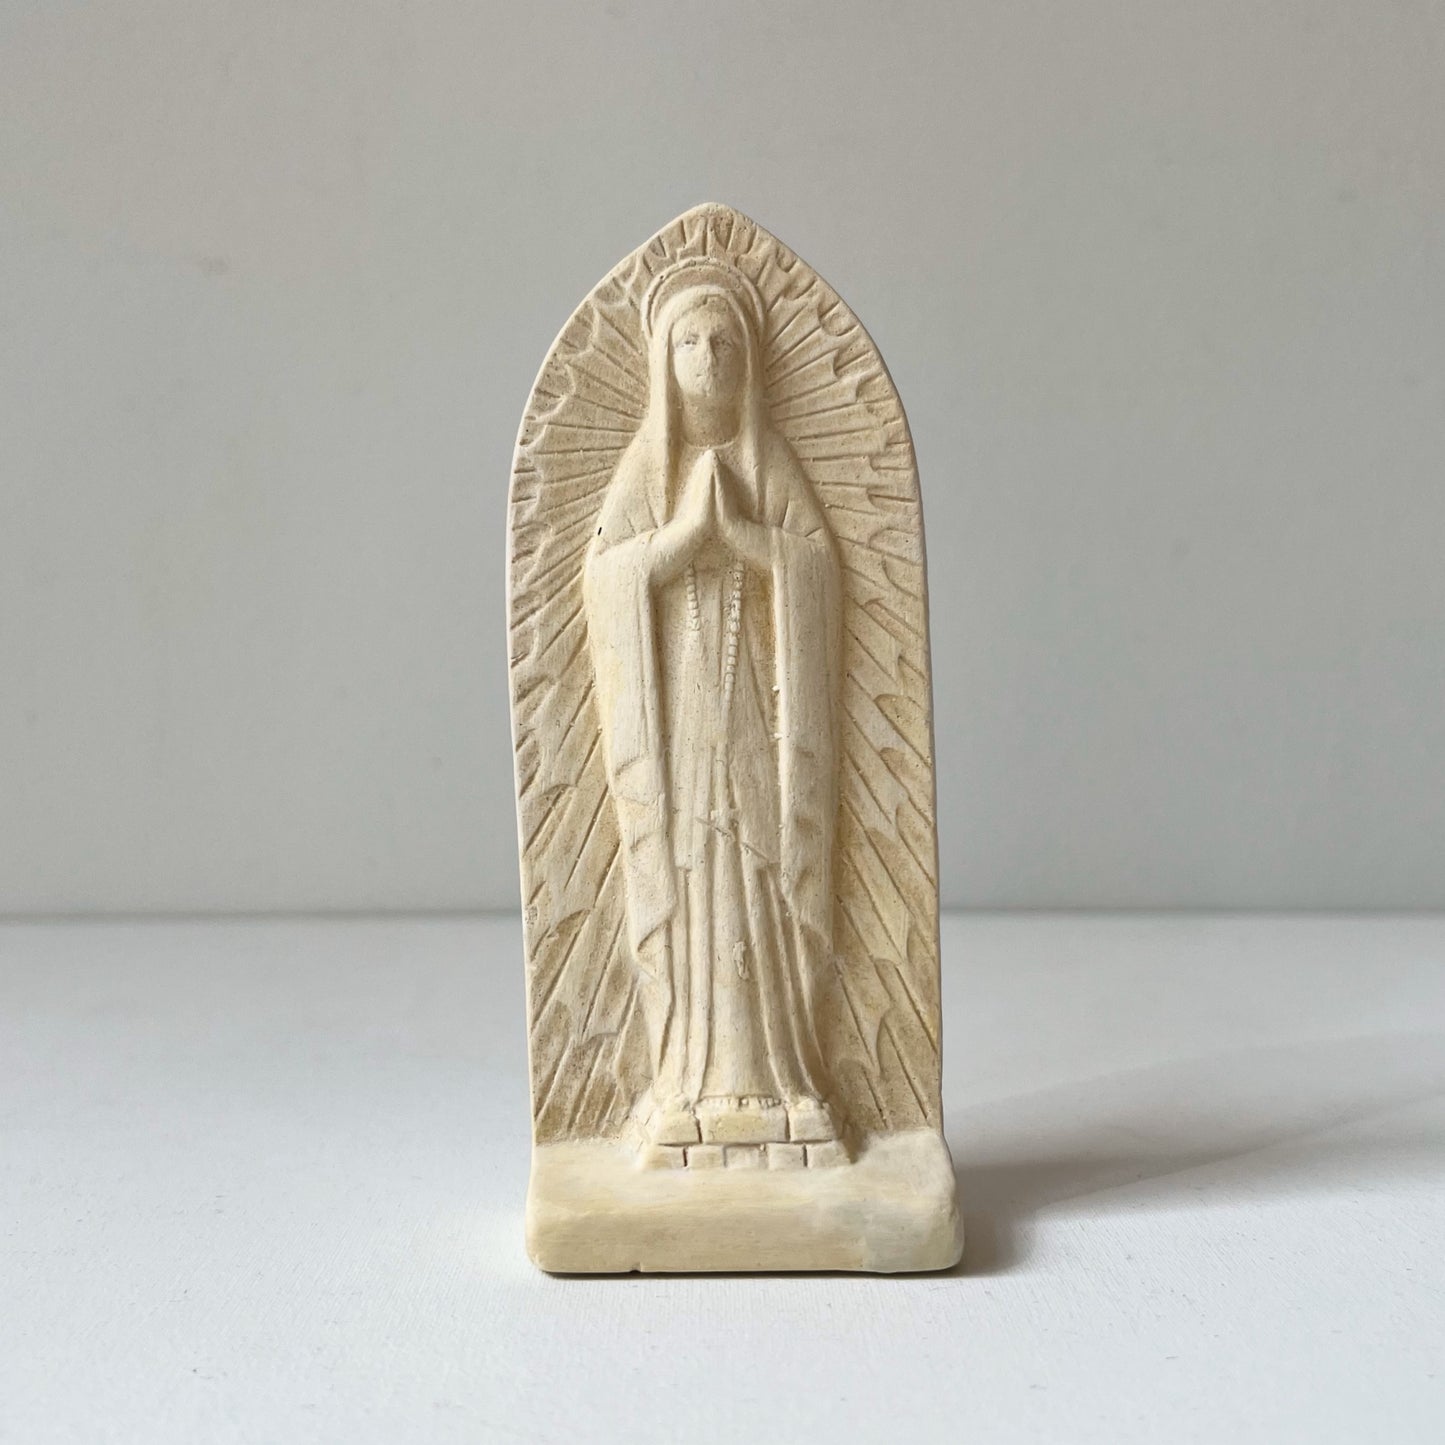 【Vintage】France - 1960s P. P. Depose Our Lady of Lourdes Statue